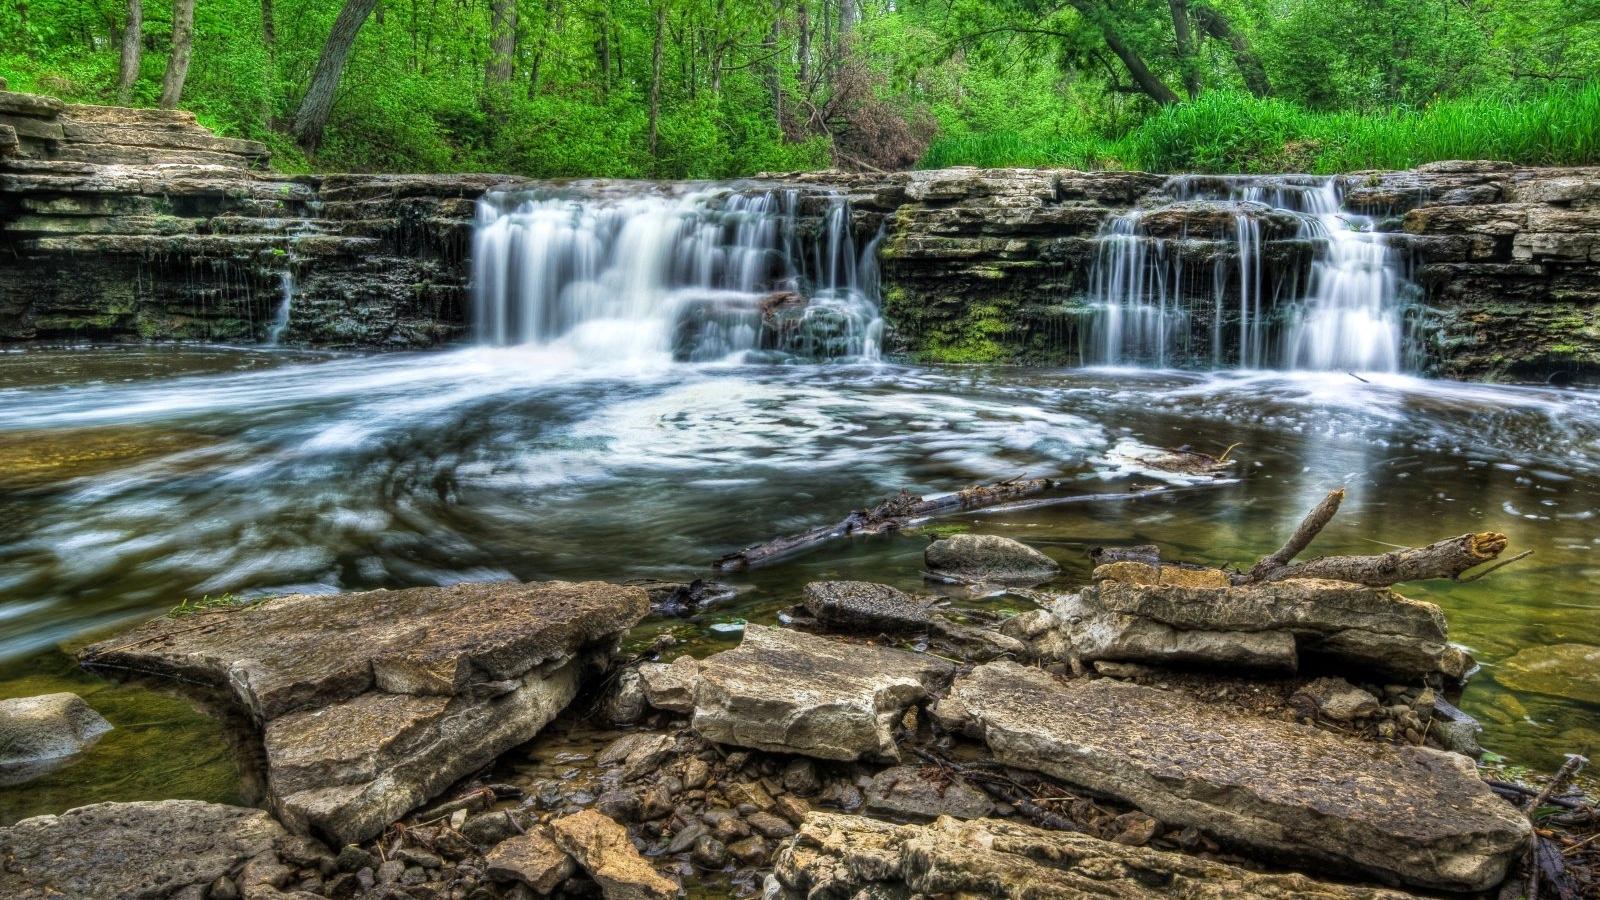 Waterfall Glen is one of the Chicago region's natural wonders. (Robert Martinez / Flickr)